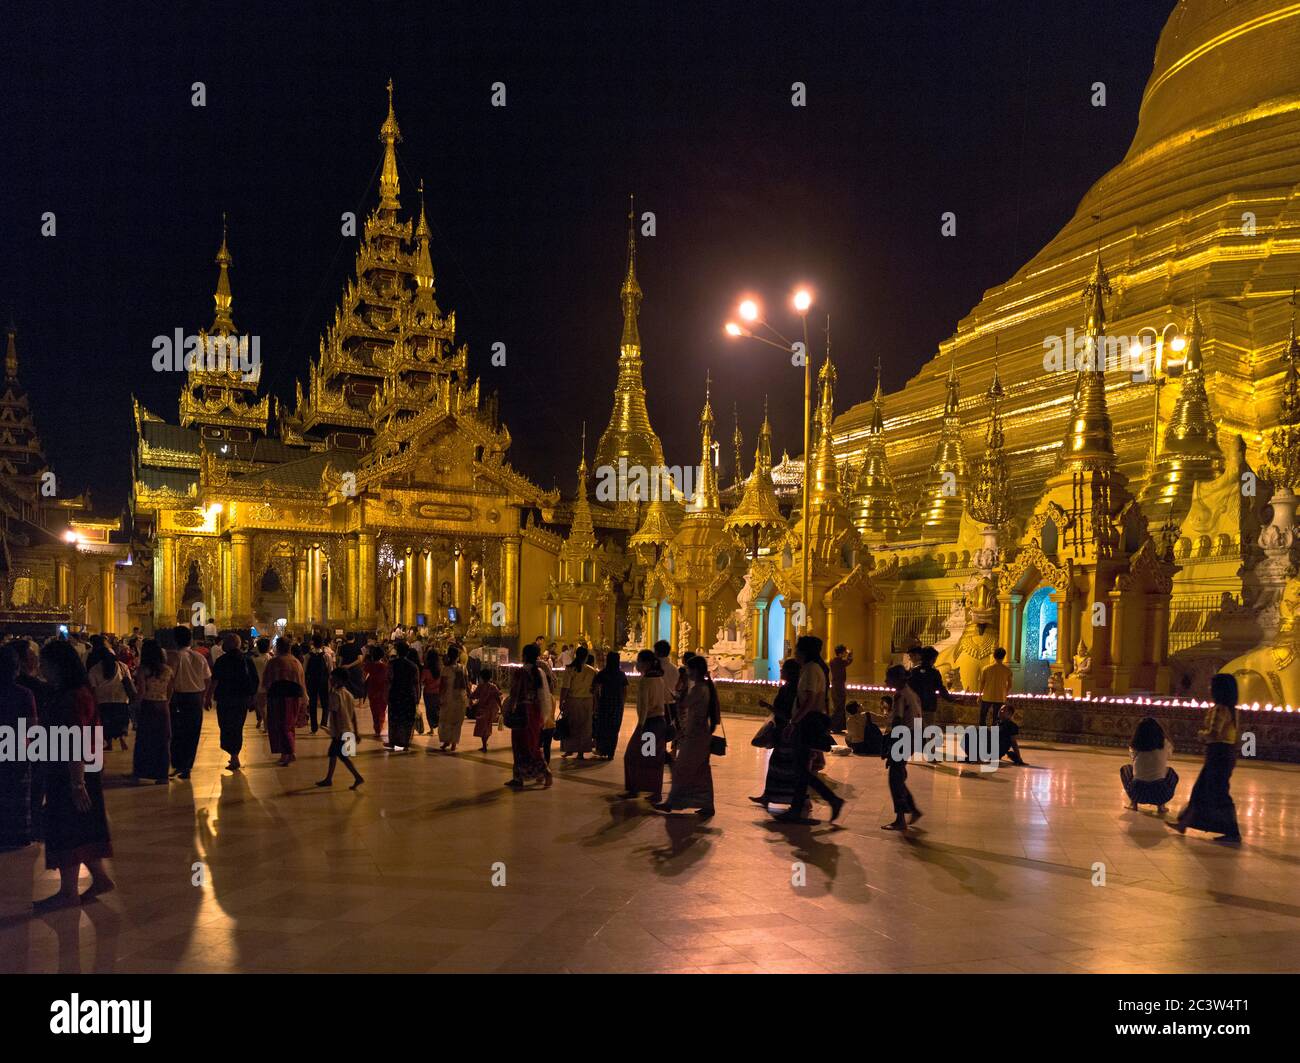 dh Shwedagon Pagodentempel YANGON MYANMAR Massen buddhistische Tempel Nacht Große Dagon Zedi Daw goldenen Stupa Blattgold Menschen burma Stockfoto